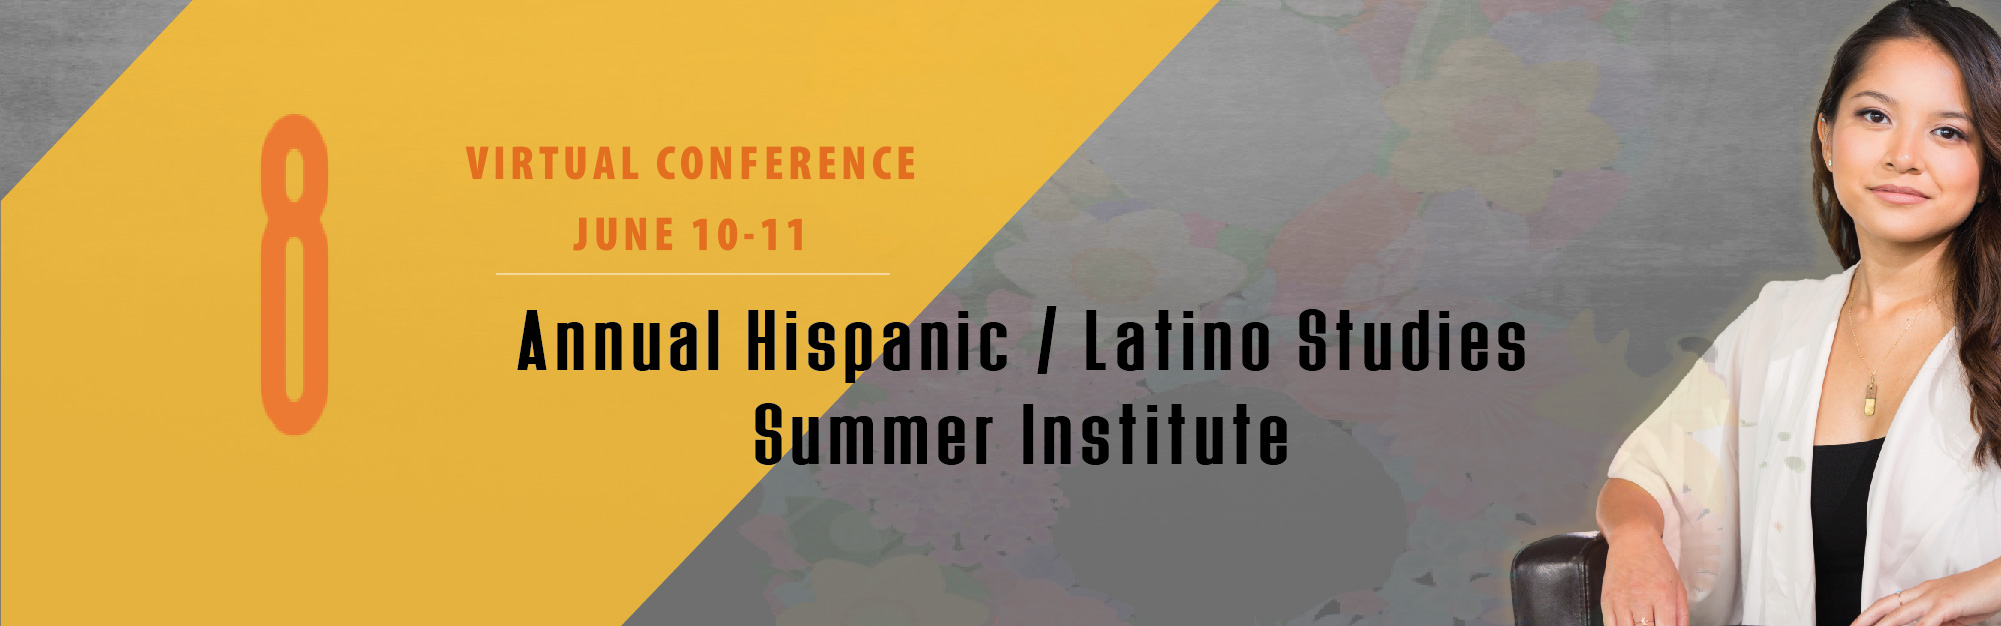 Virtual Conference June 10-11 - Annual Hispanic/Latino Studies Summer Institute